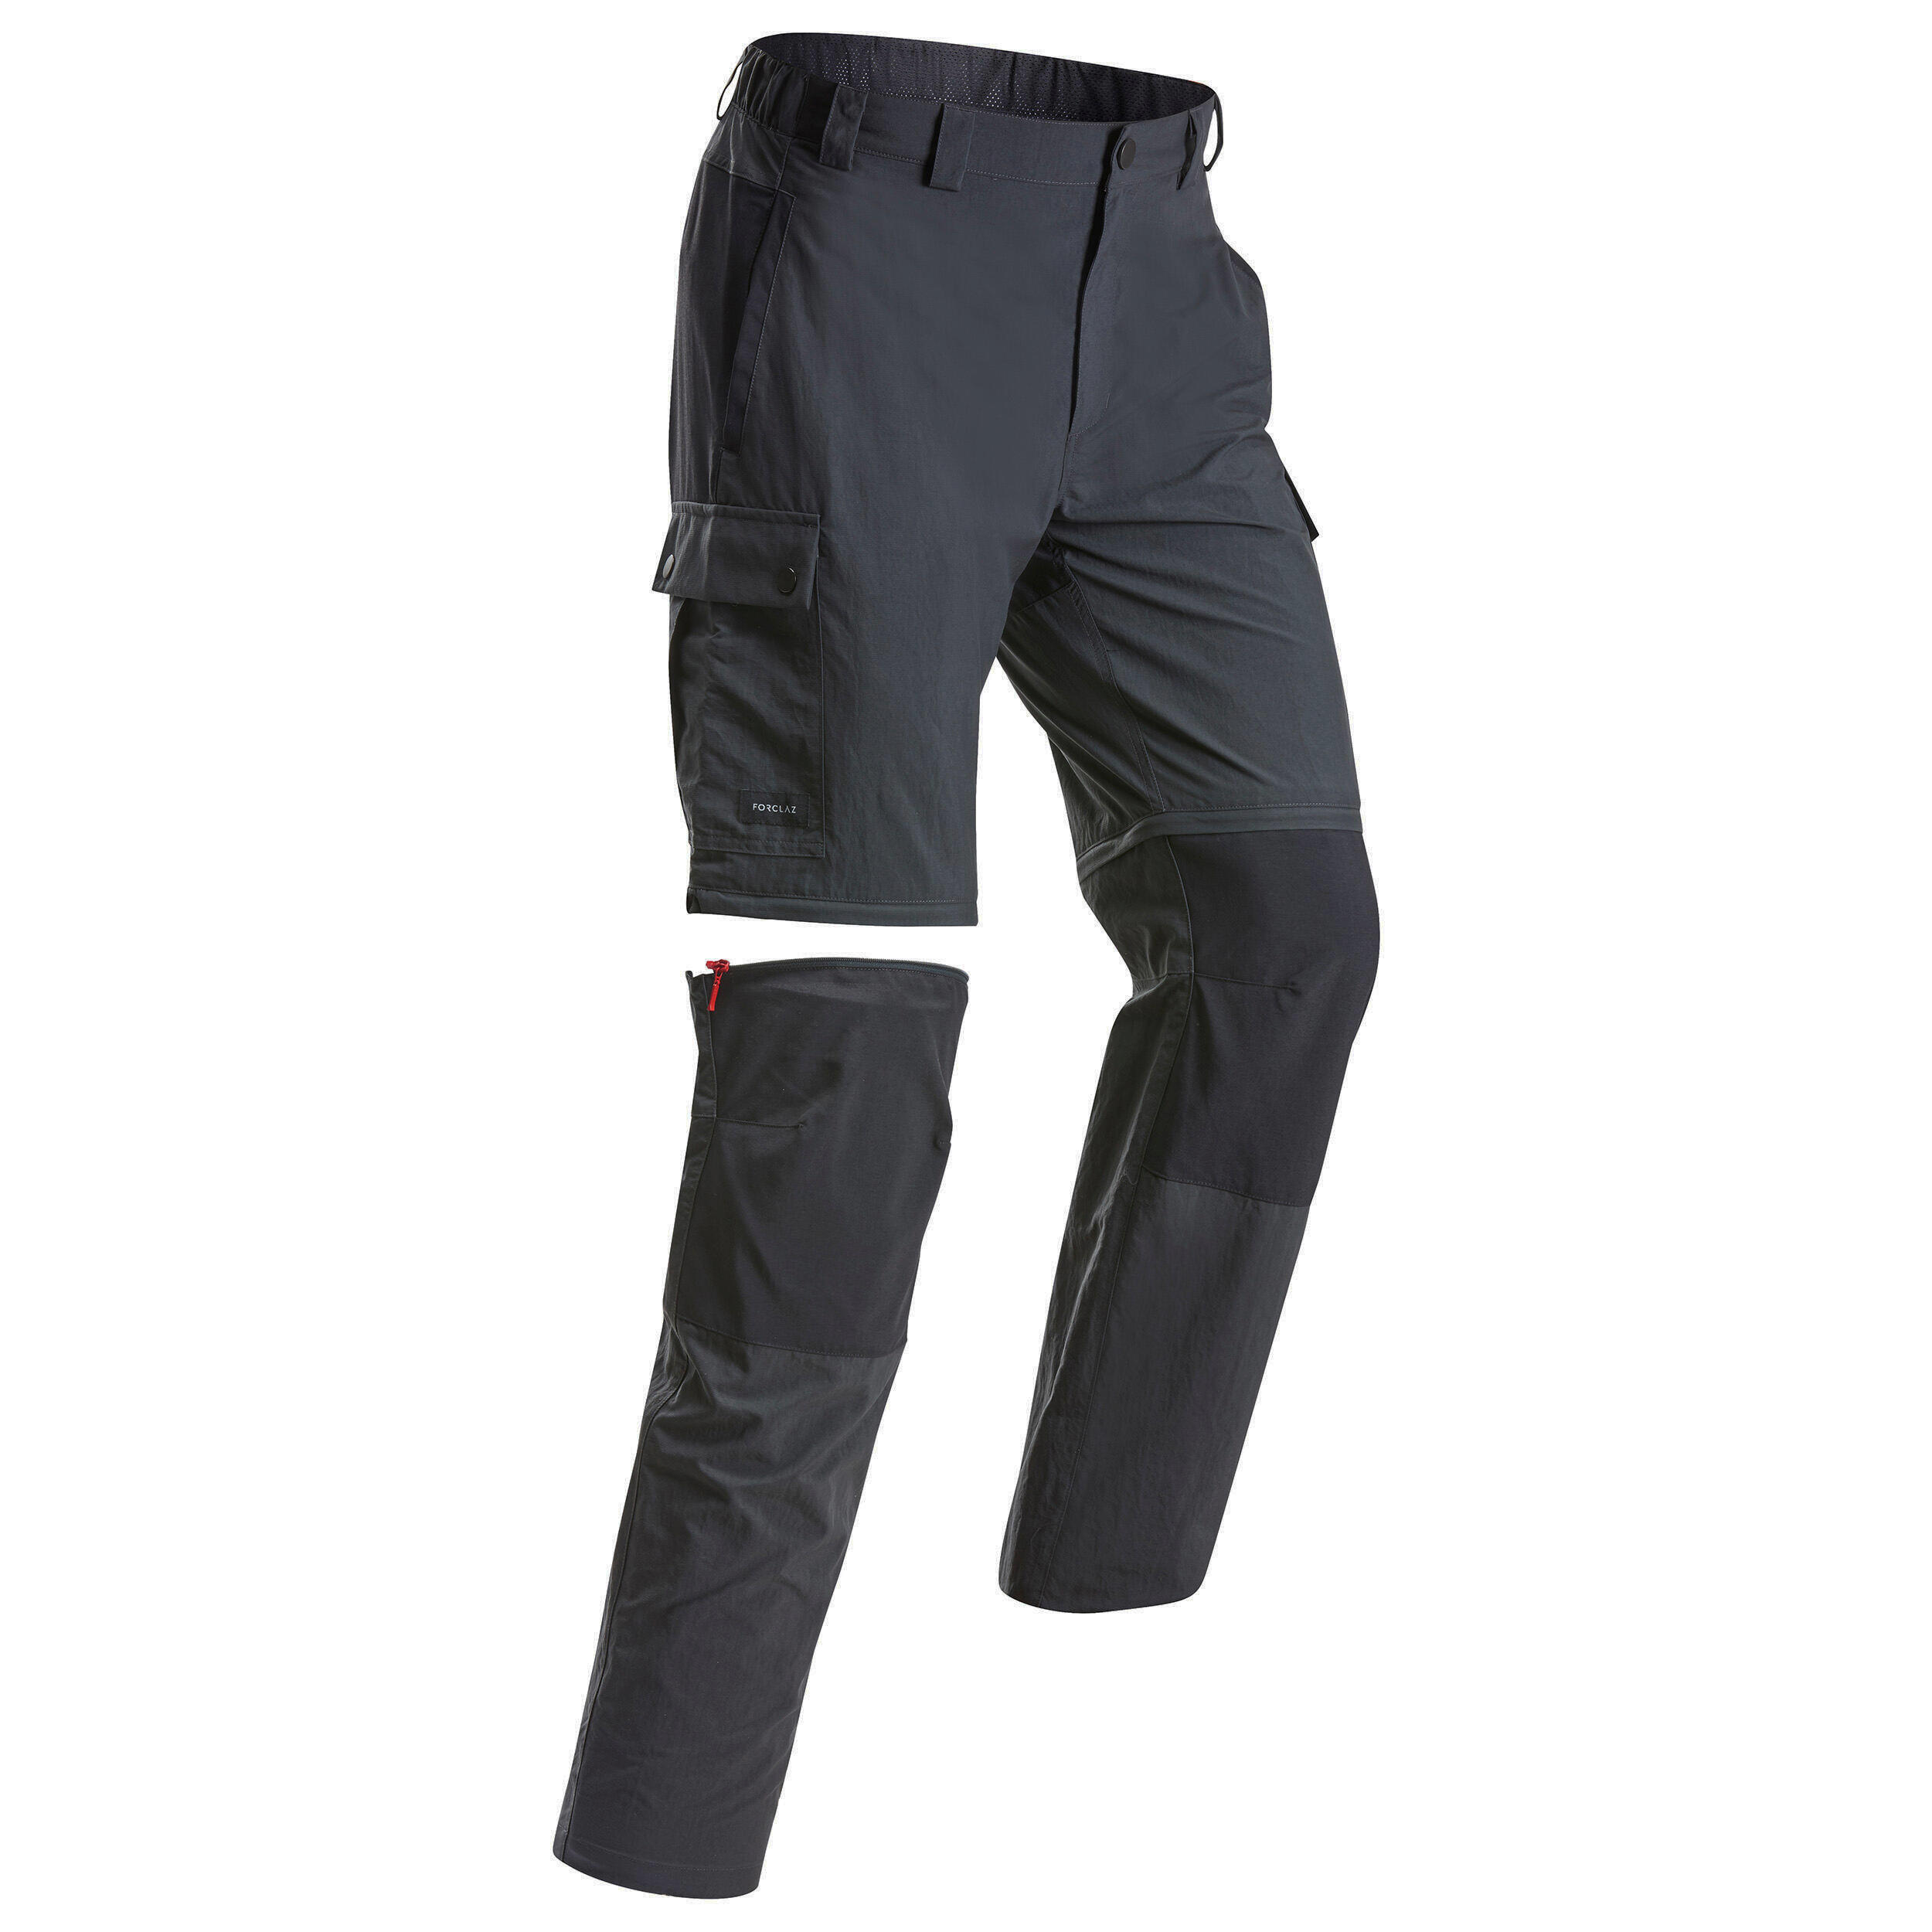 Liberator pants become shorts quick as a zipper  Outdoor outfit  Performance outfit Performance shirts